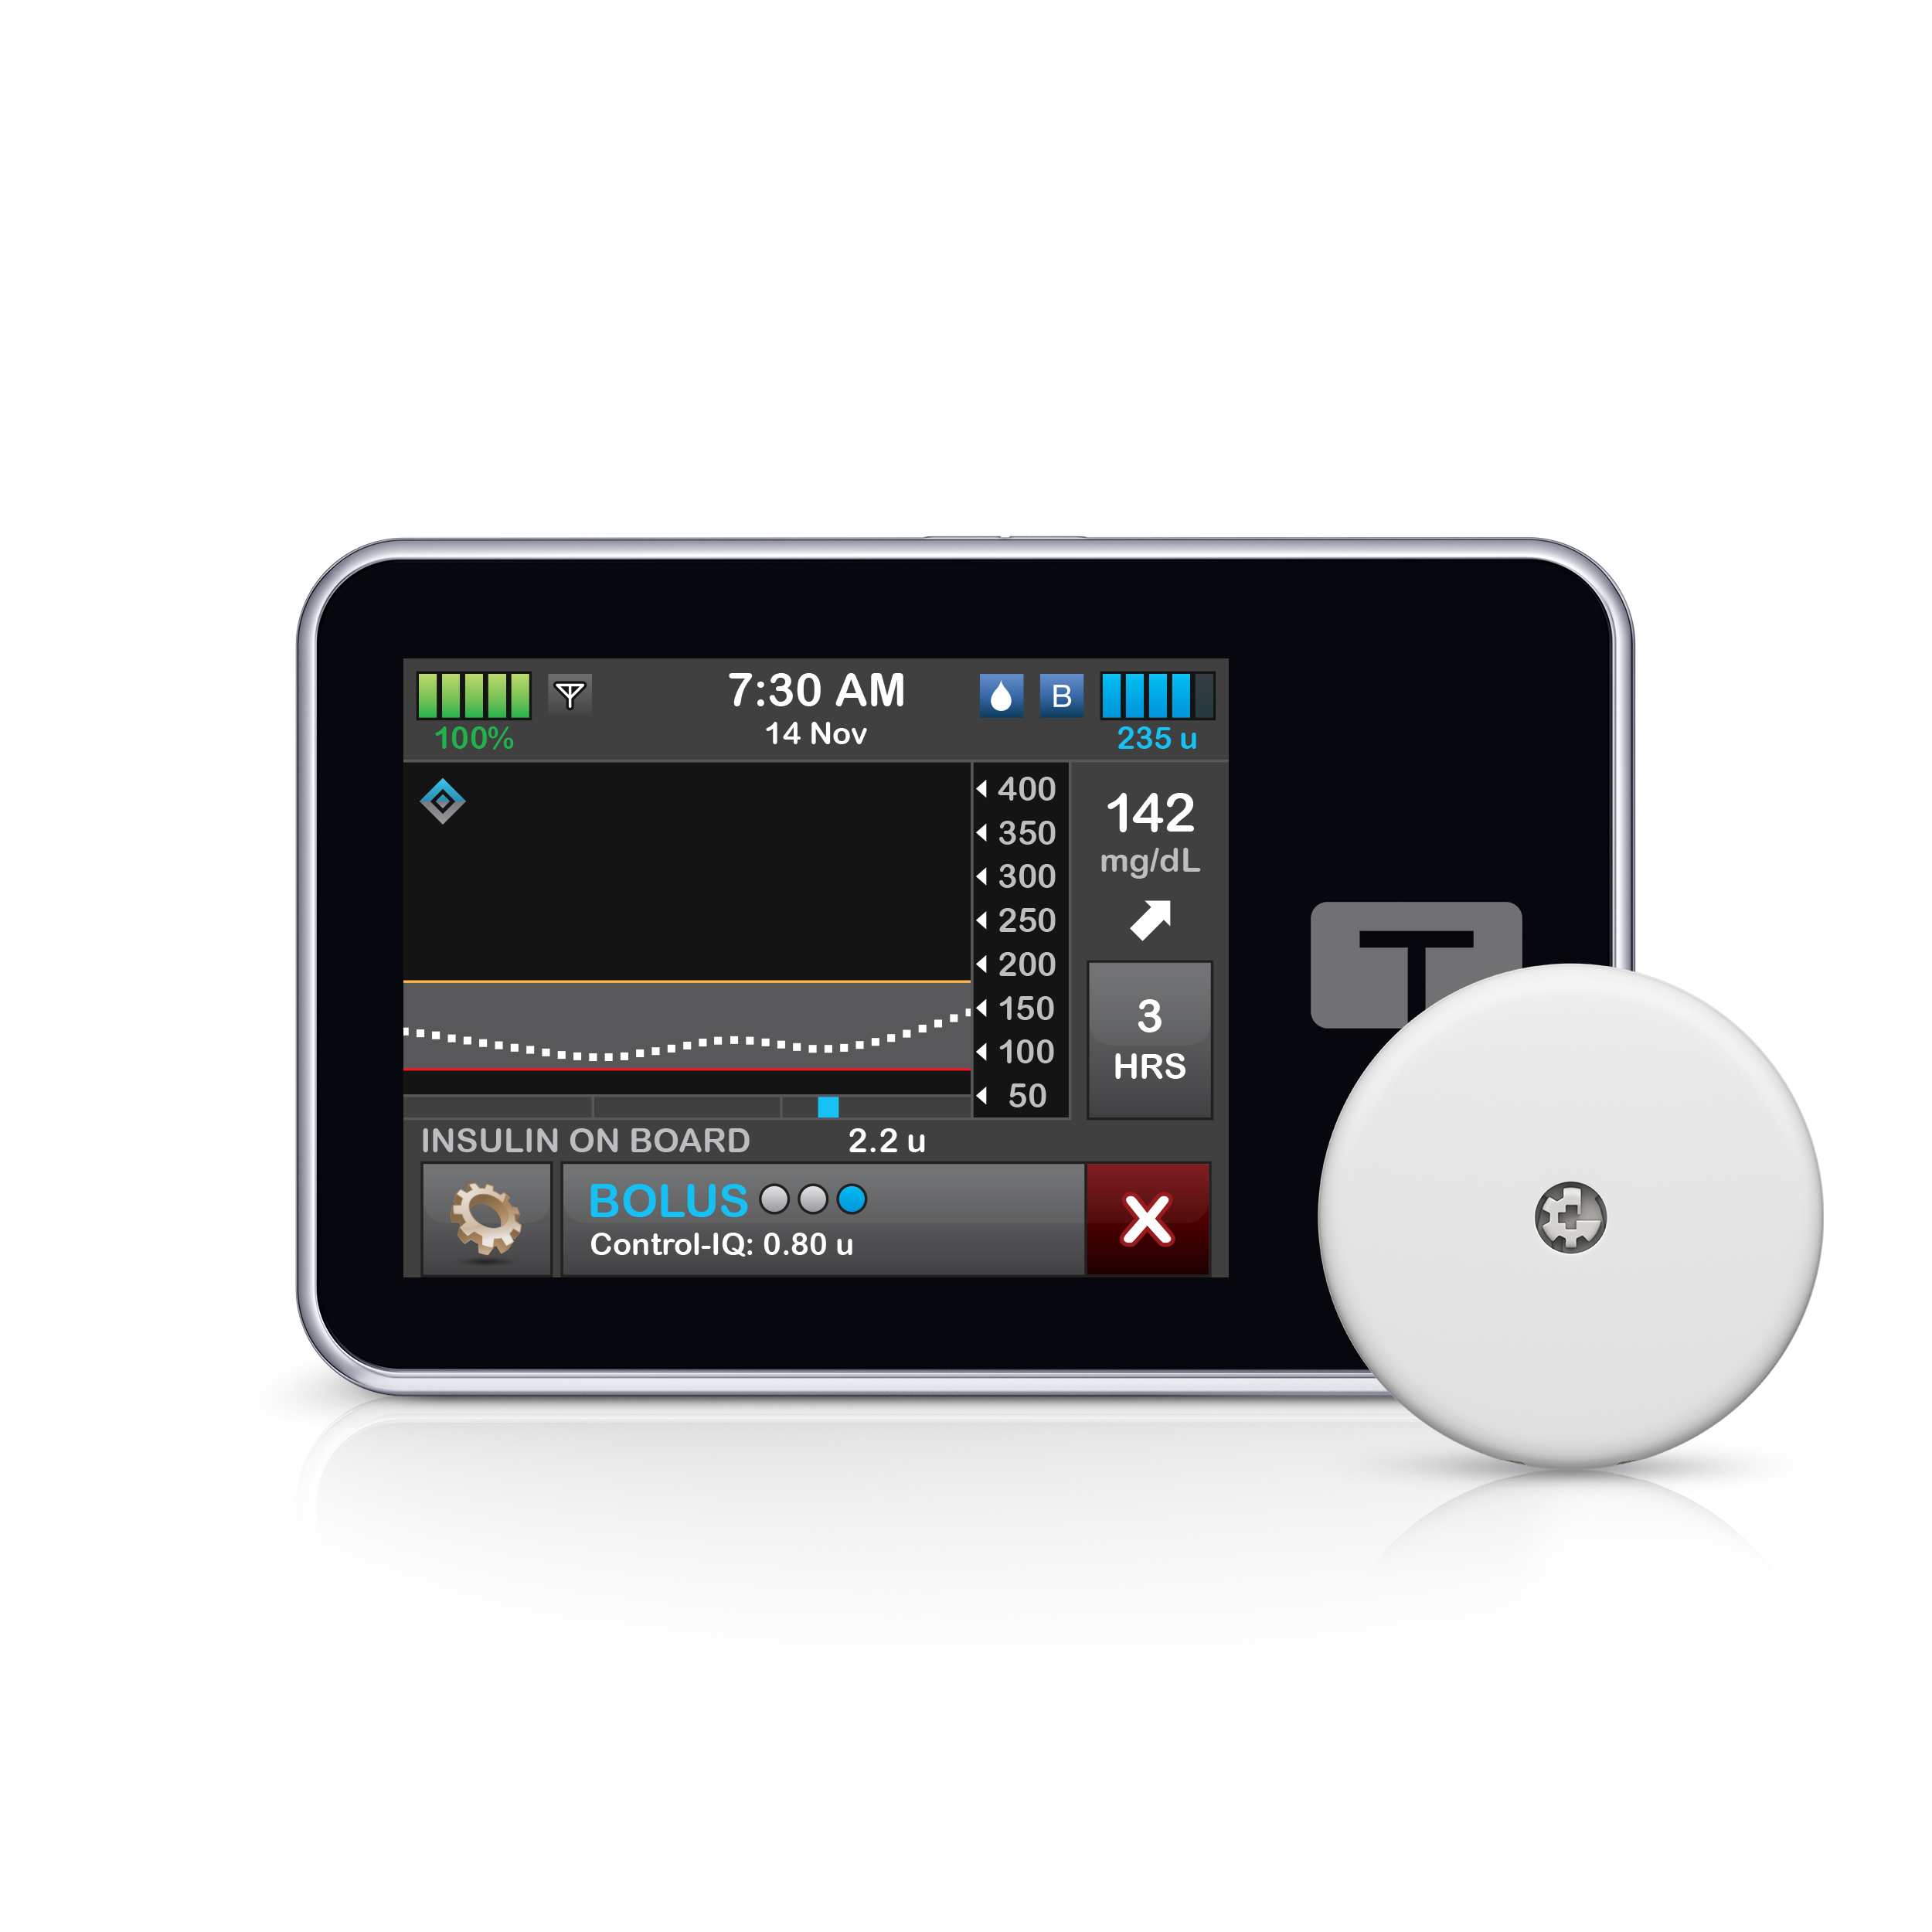 FreeStyle Libre 2 Plus sensor with Tandem insulin pump